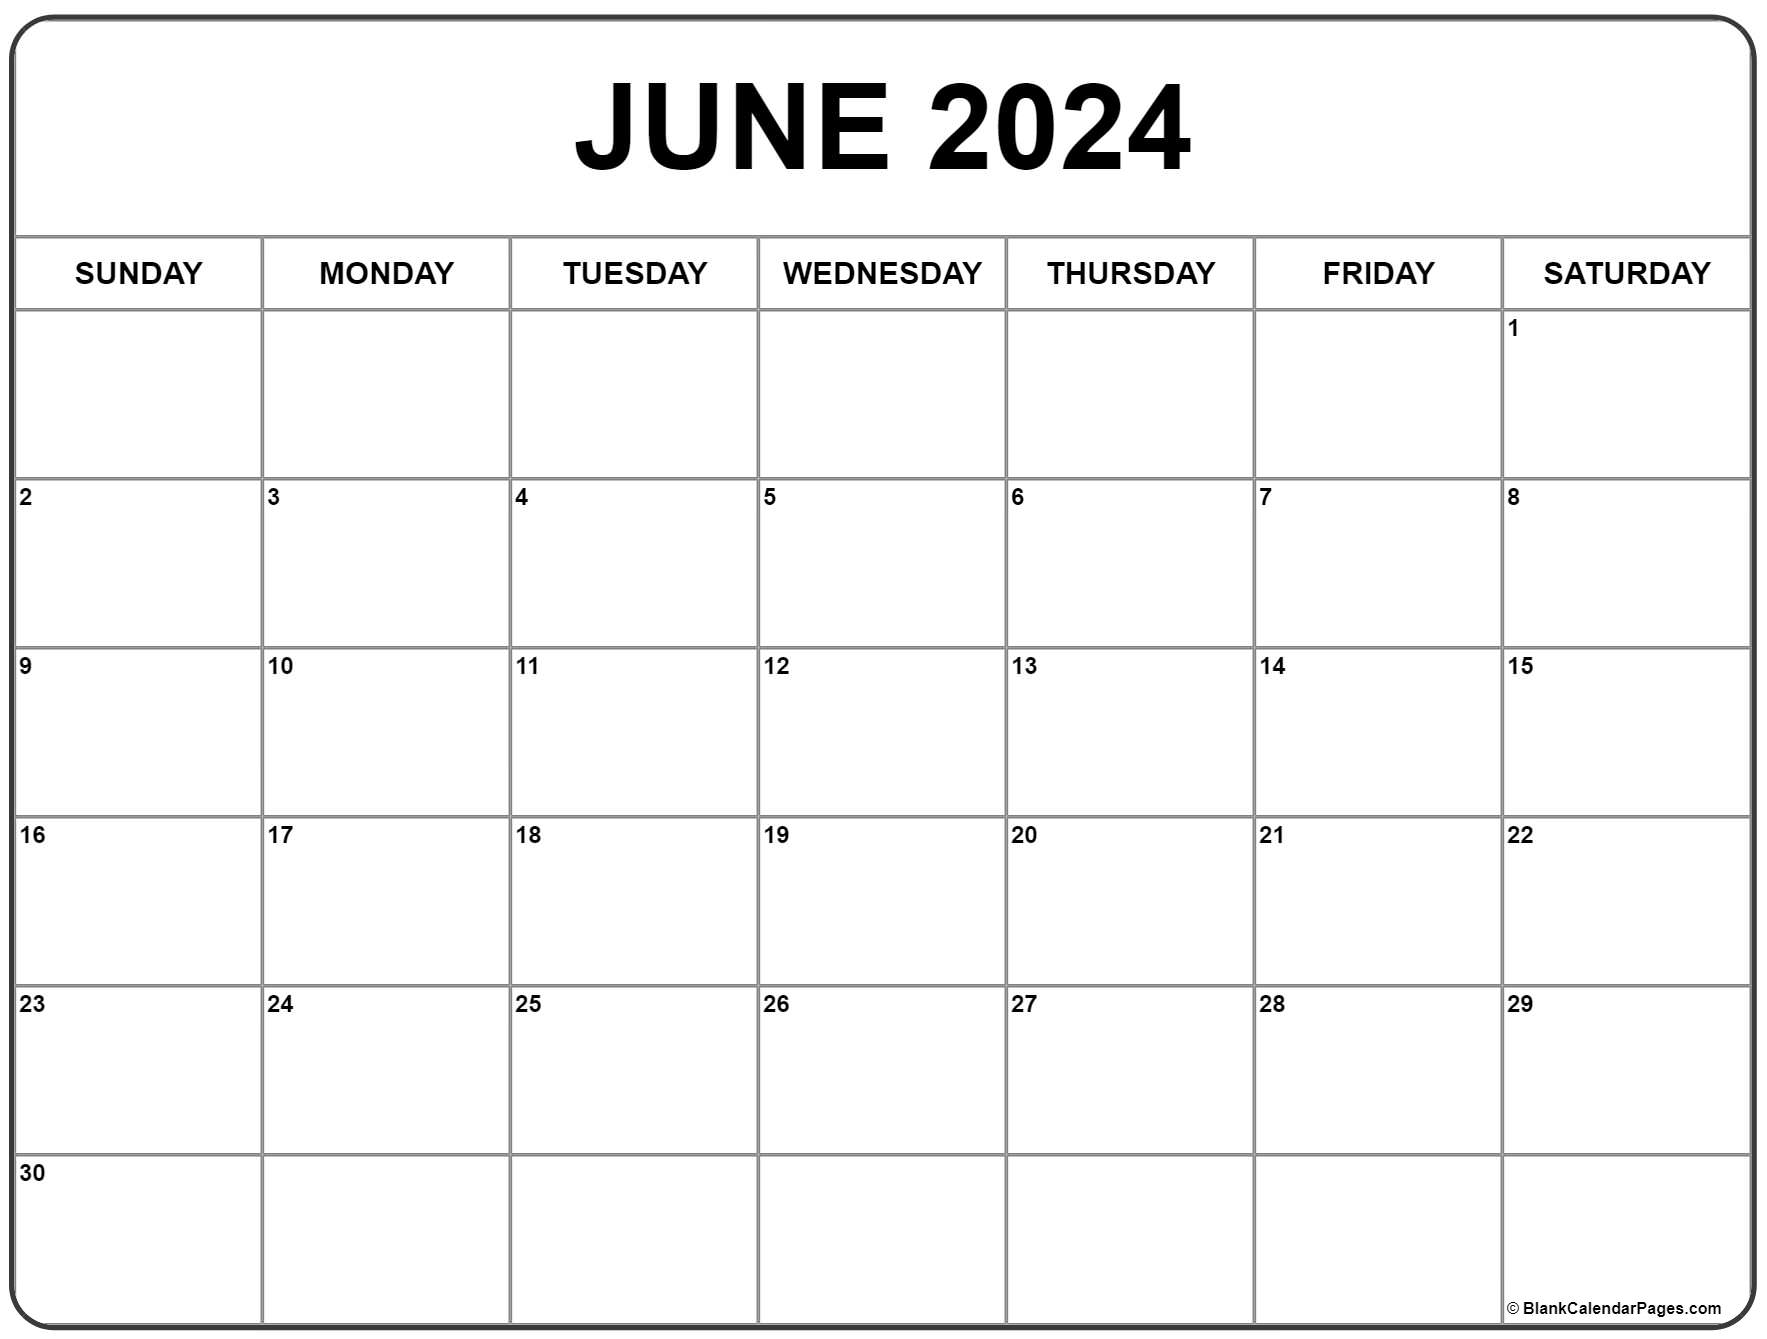 June 2024 Calendar | Free Printable Calendar for Printable Calendar June 2024